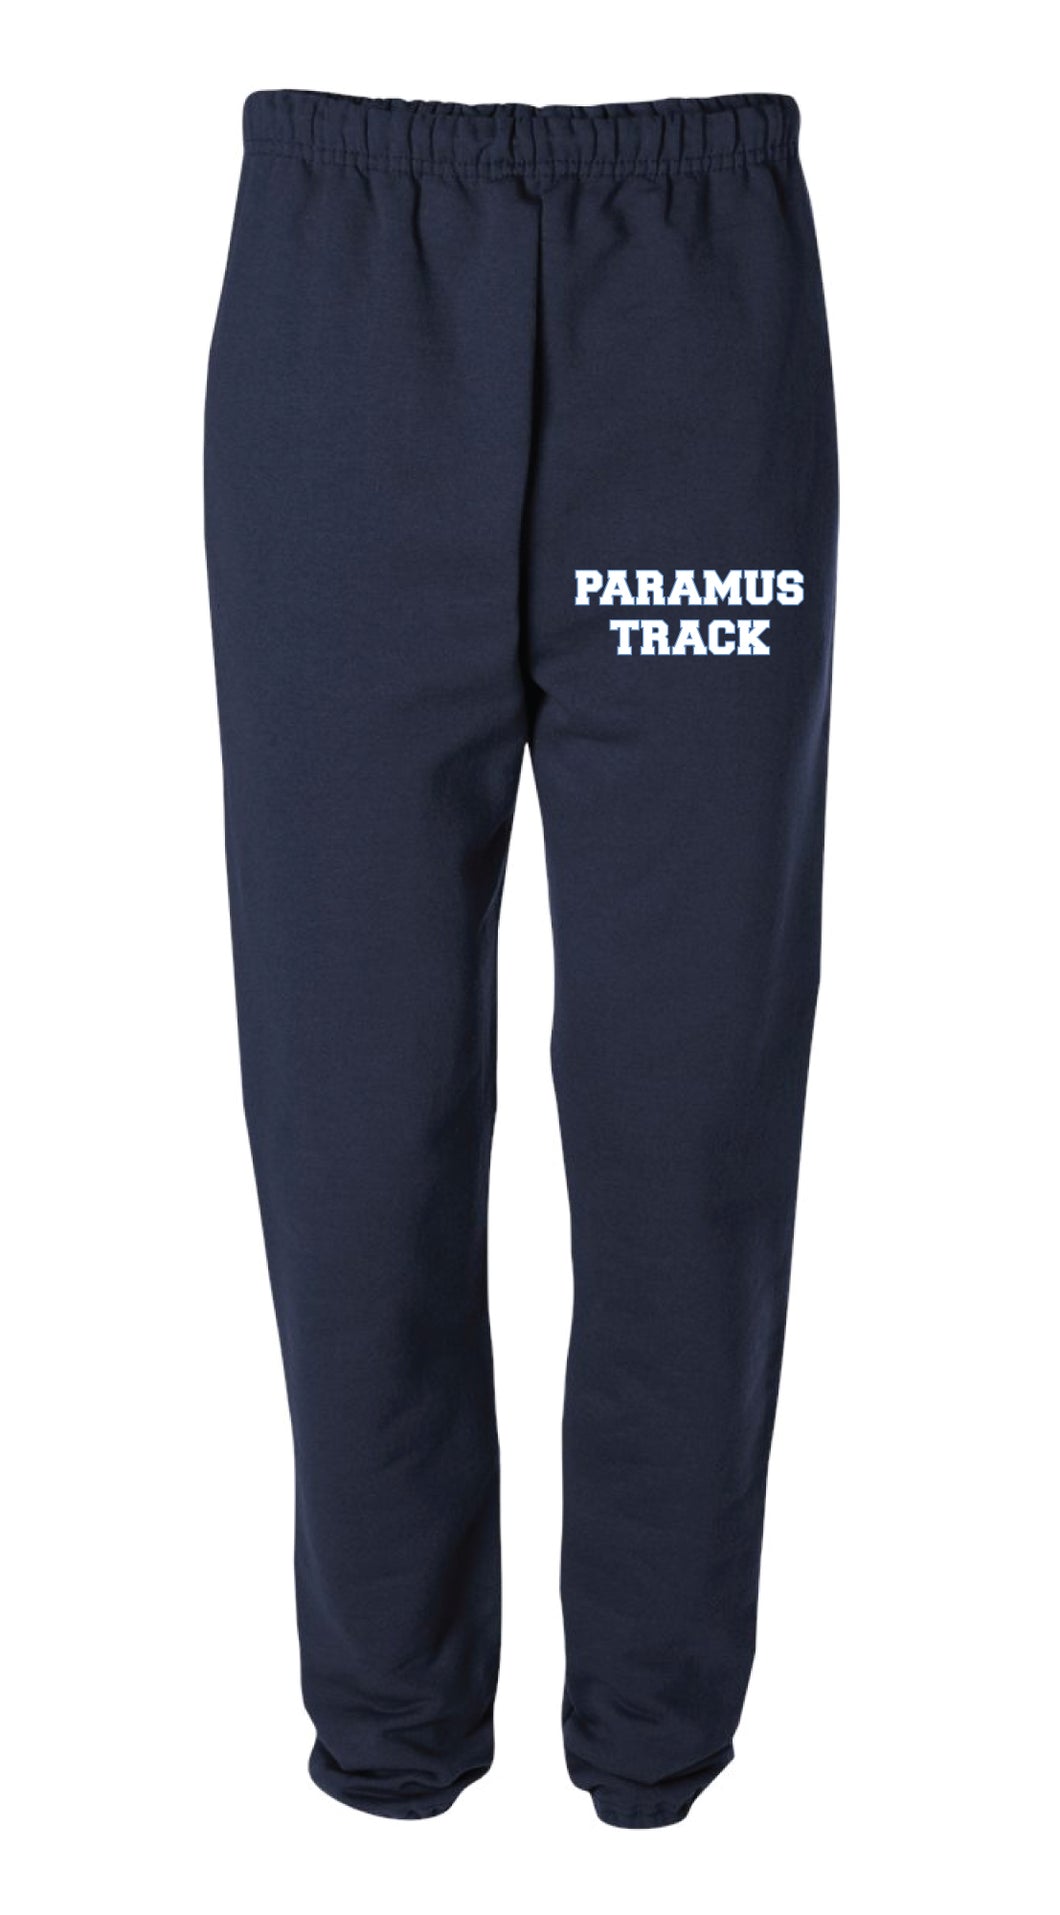 Paramus Track Cotton Sweatpants - Navy - 5KounT2018